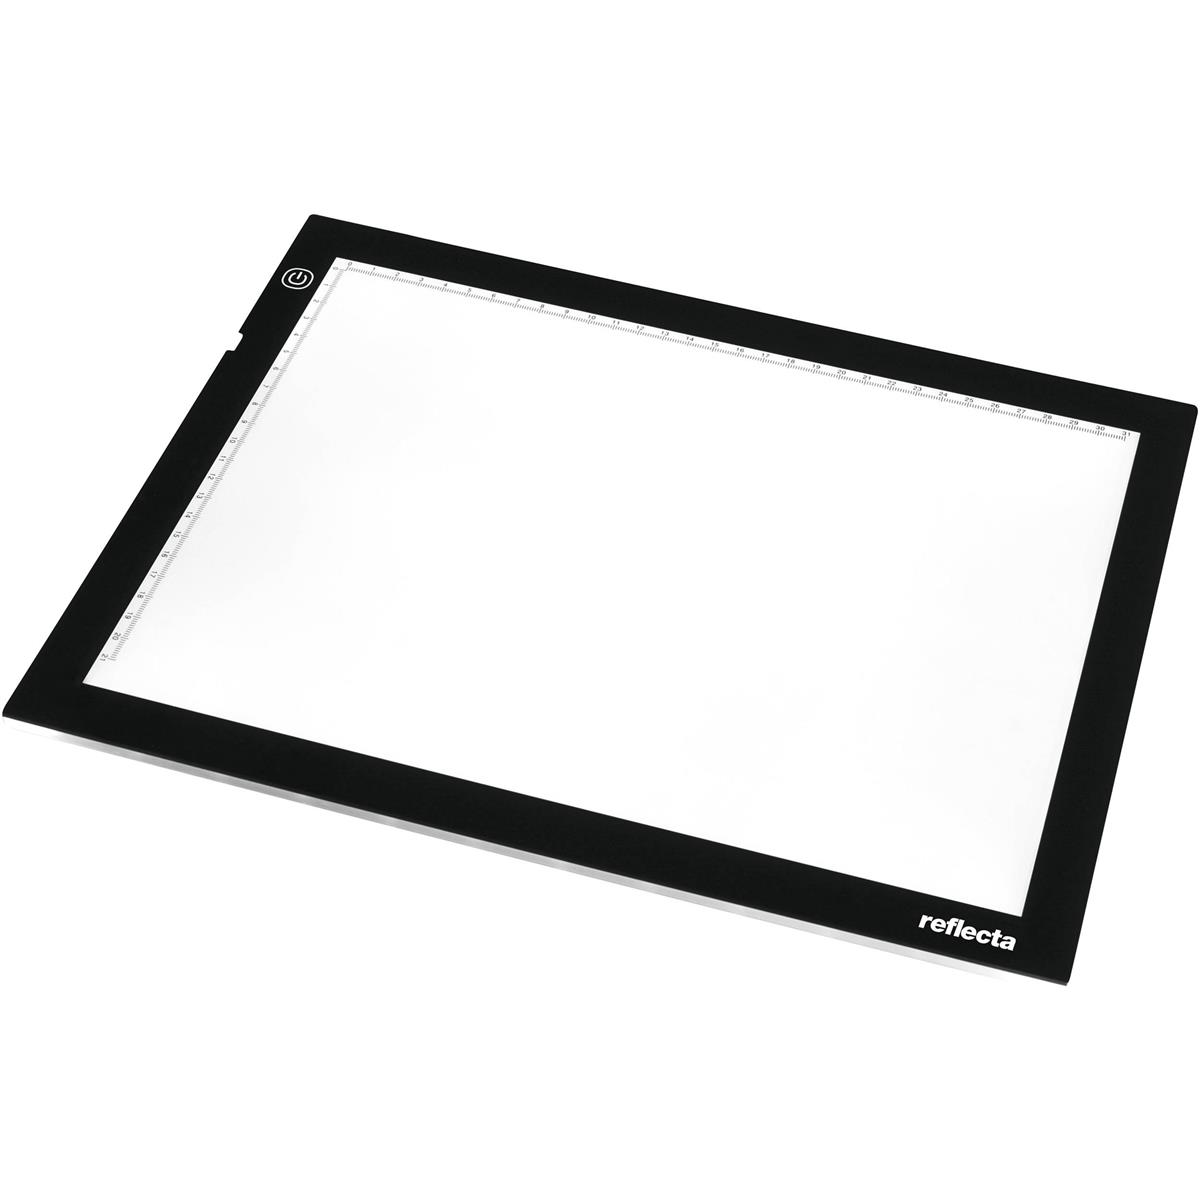 Image of Reflecta A3 Super Slim LED Light Pad